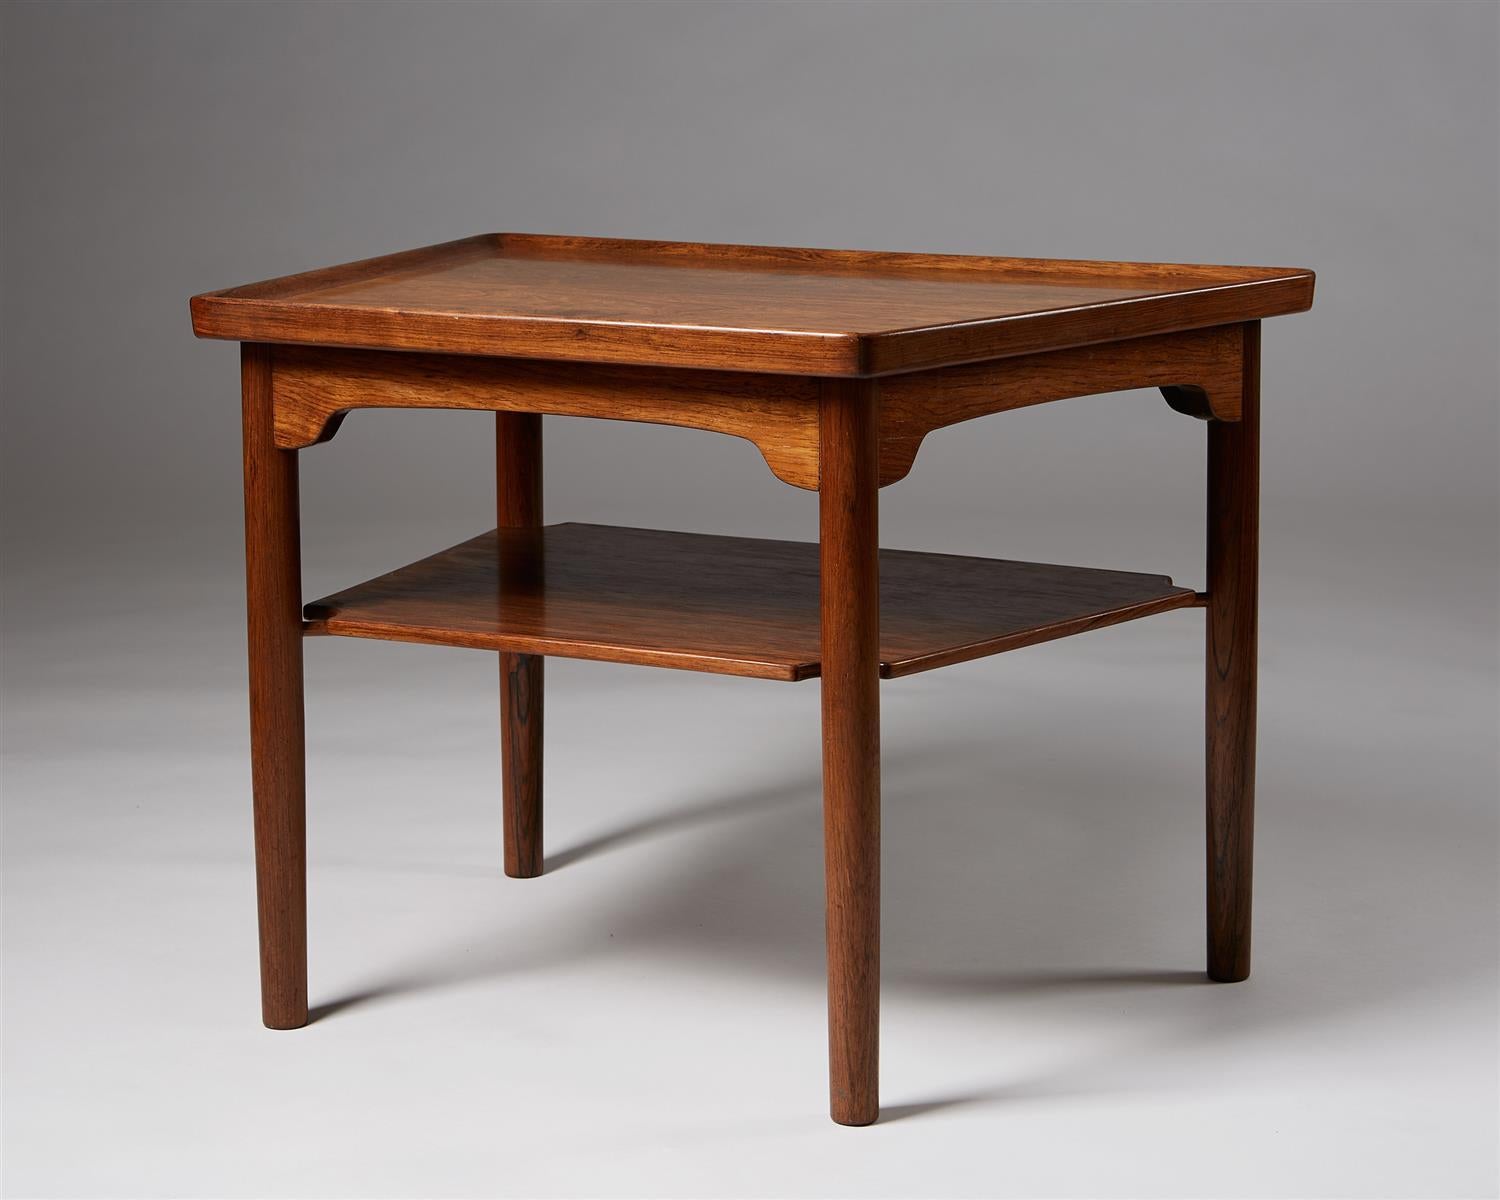 Occasional table anonymous,
Denmark. 1950s.

Brazilian rosewood.

Irregular form.

Dimensions:
H: 58 cm/ 22 3/4''
L: 80 cm/ 31 1/2''
D: 60 cm/ 23 1/2''